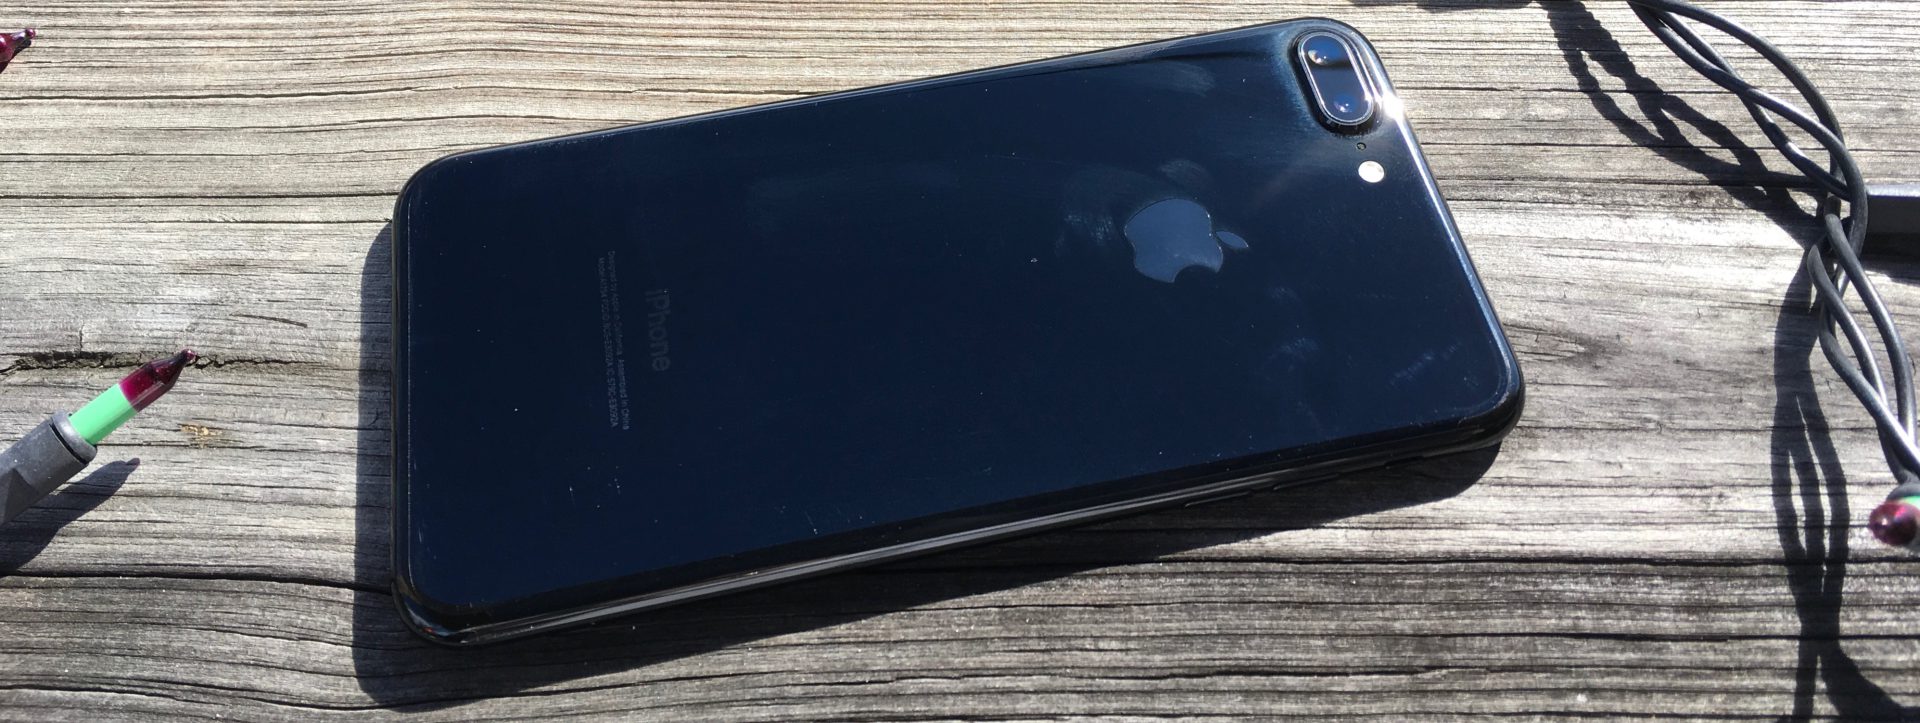 iPhone 7 negro brillante con arañazos